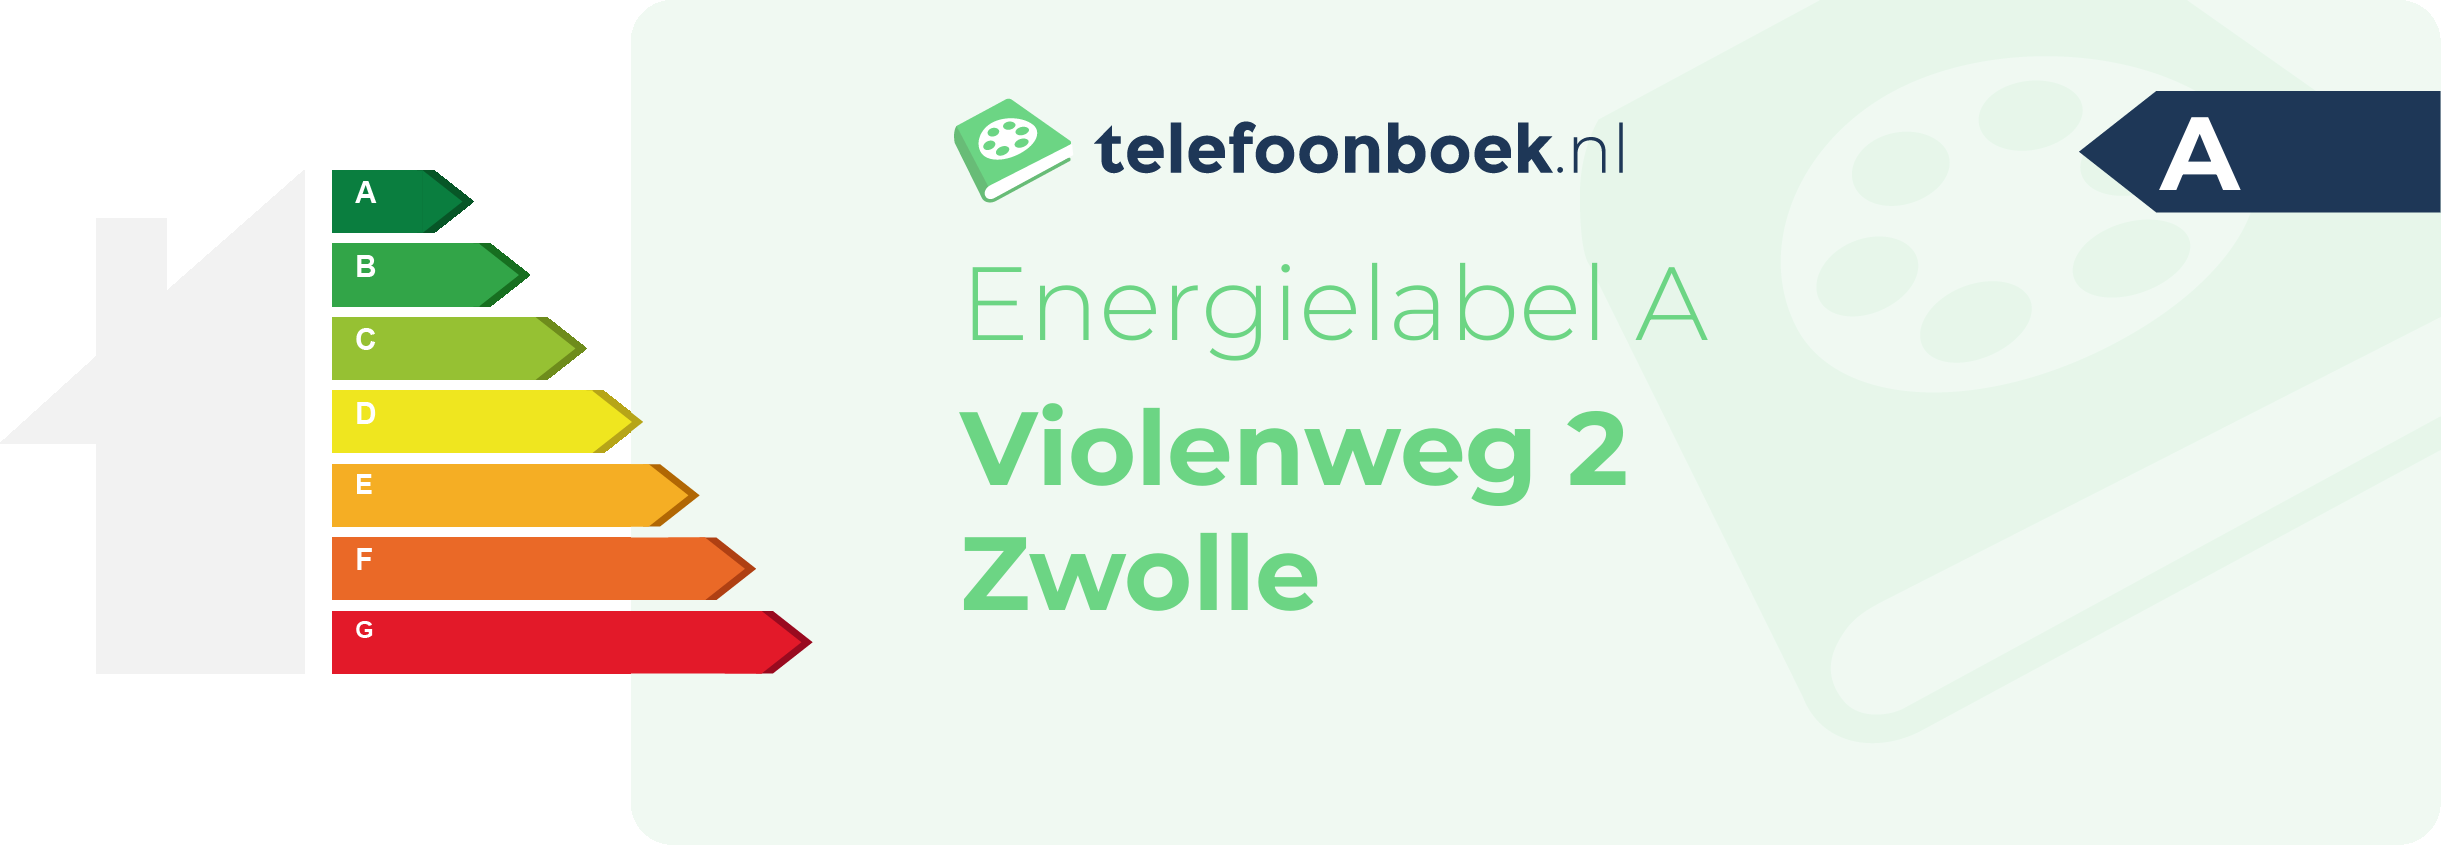 Energielabel Violenweg 2 Zwolle